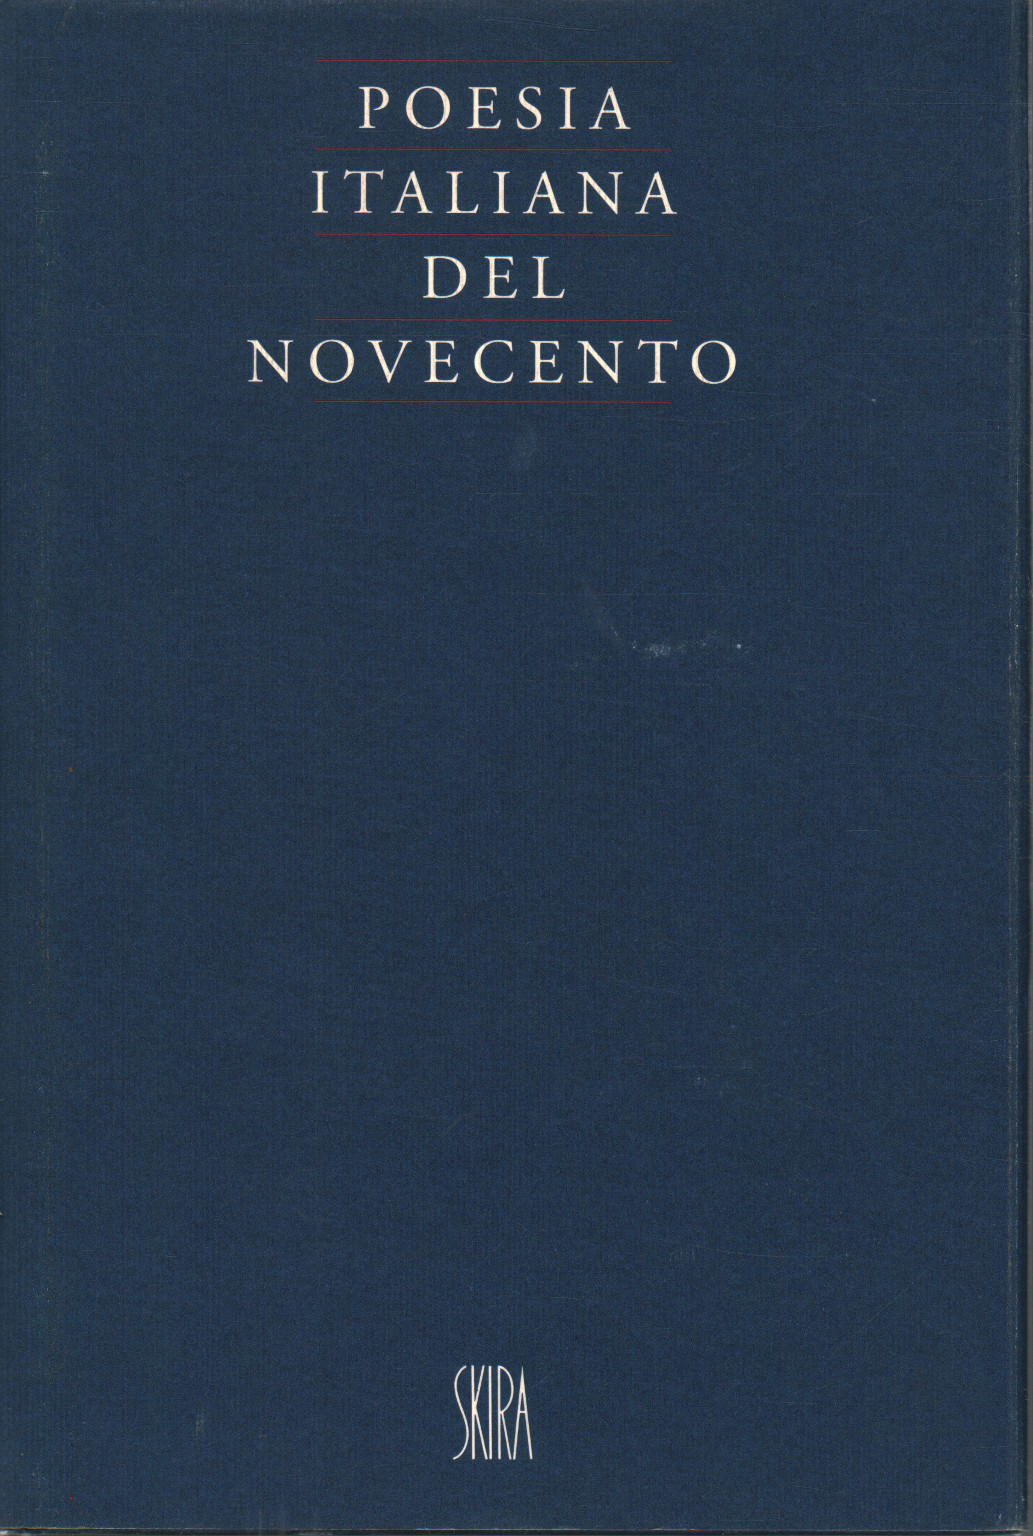 Poesia italiana del Novecento, s.a.